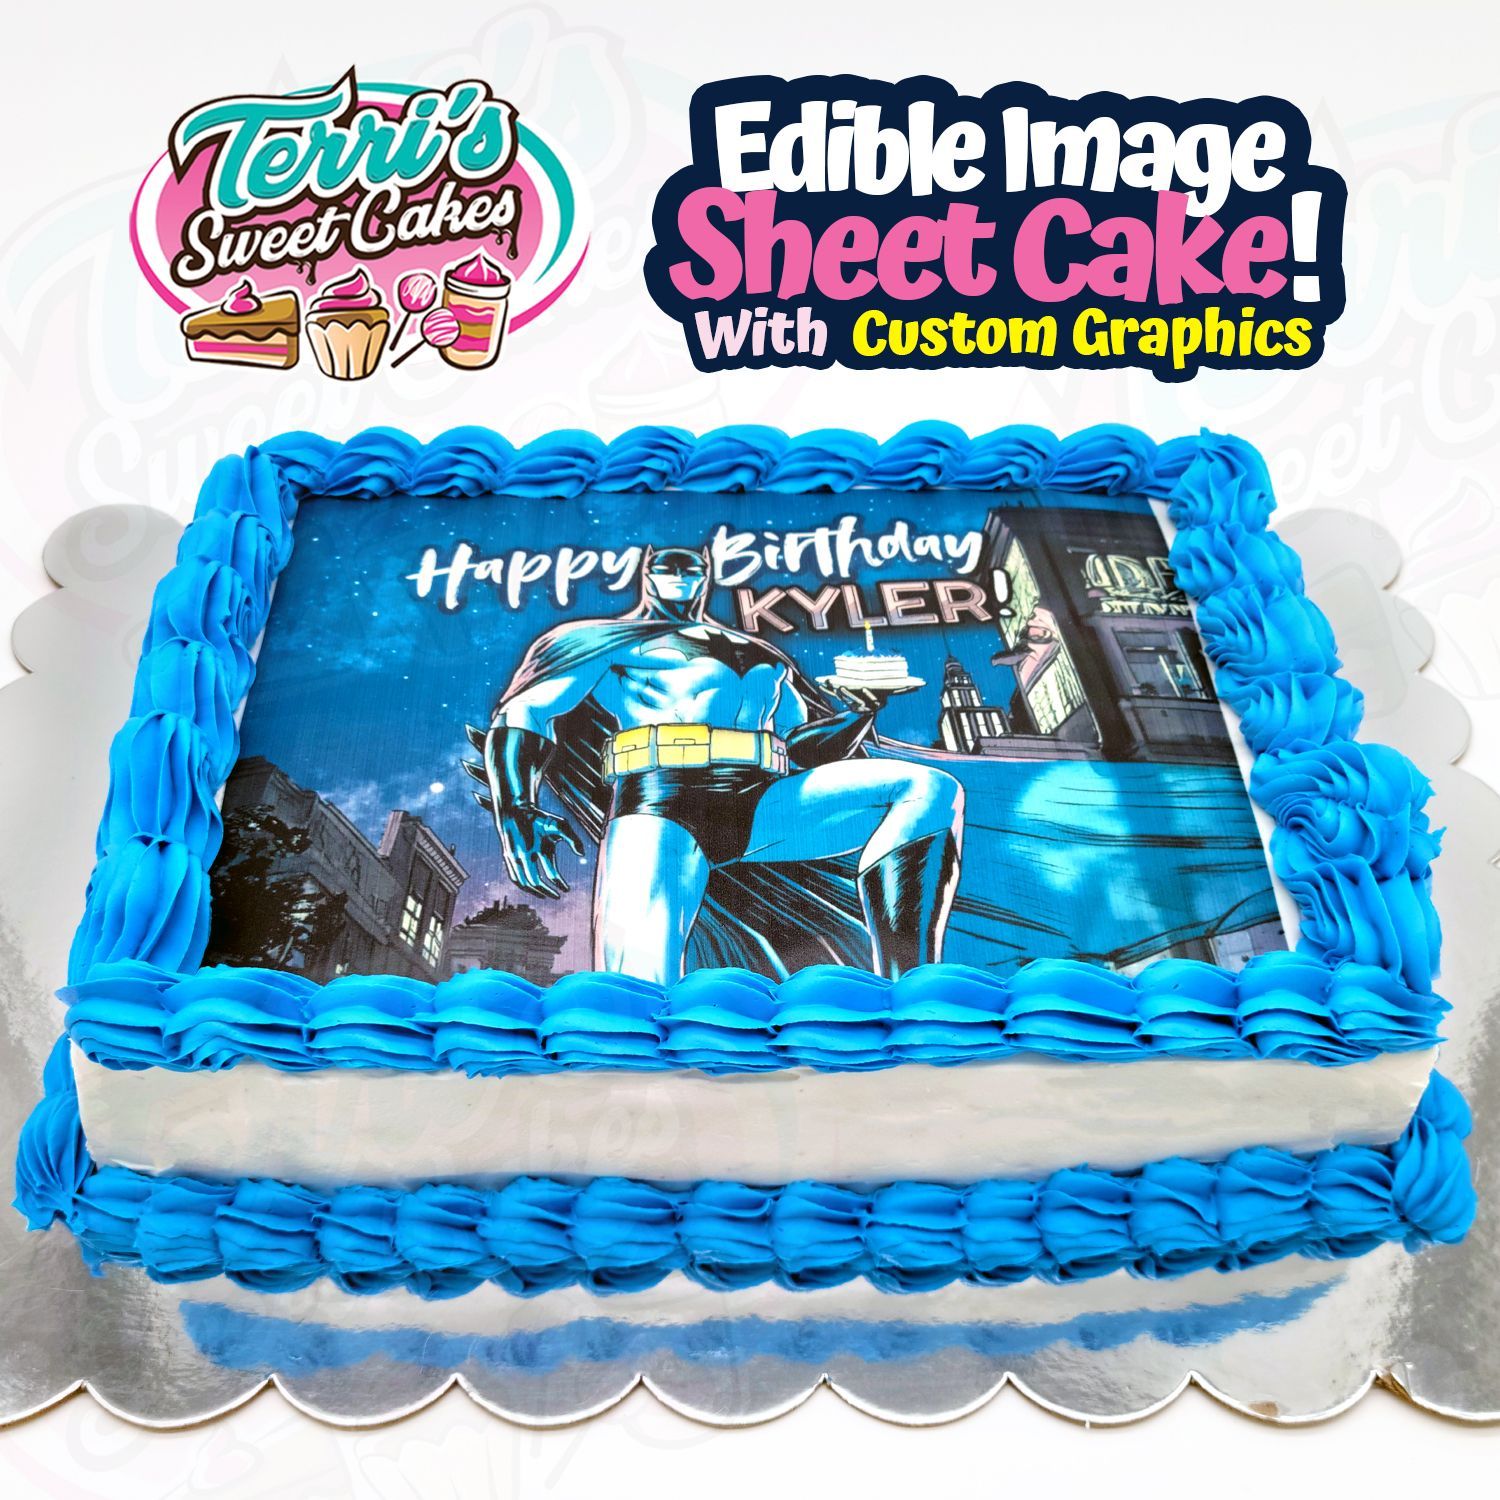 Batman Themed Edible Image Cake with Custom Graphics by Terri's Sweet Cakes!